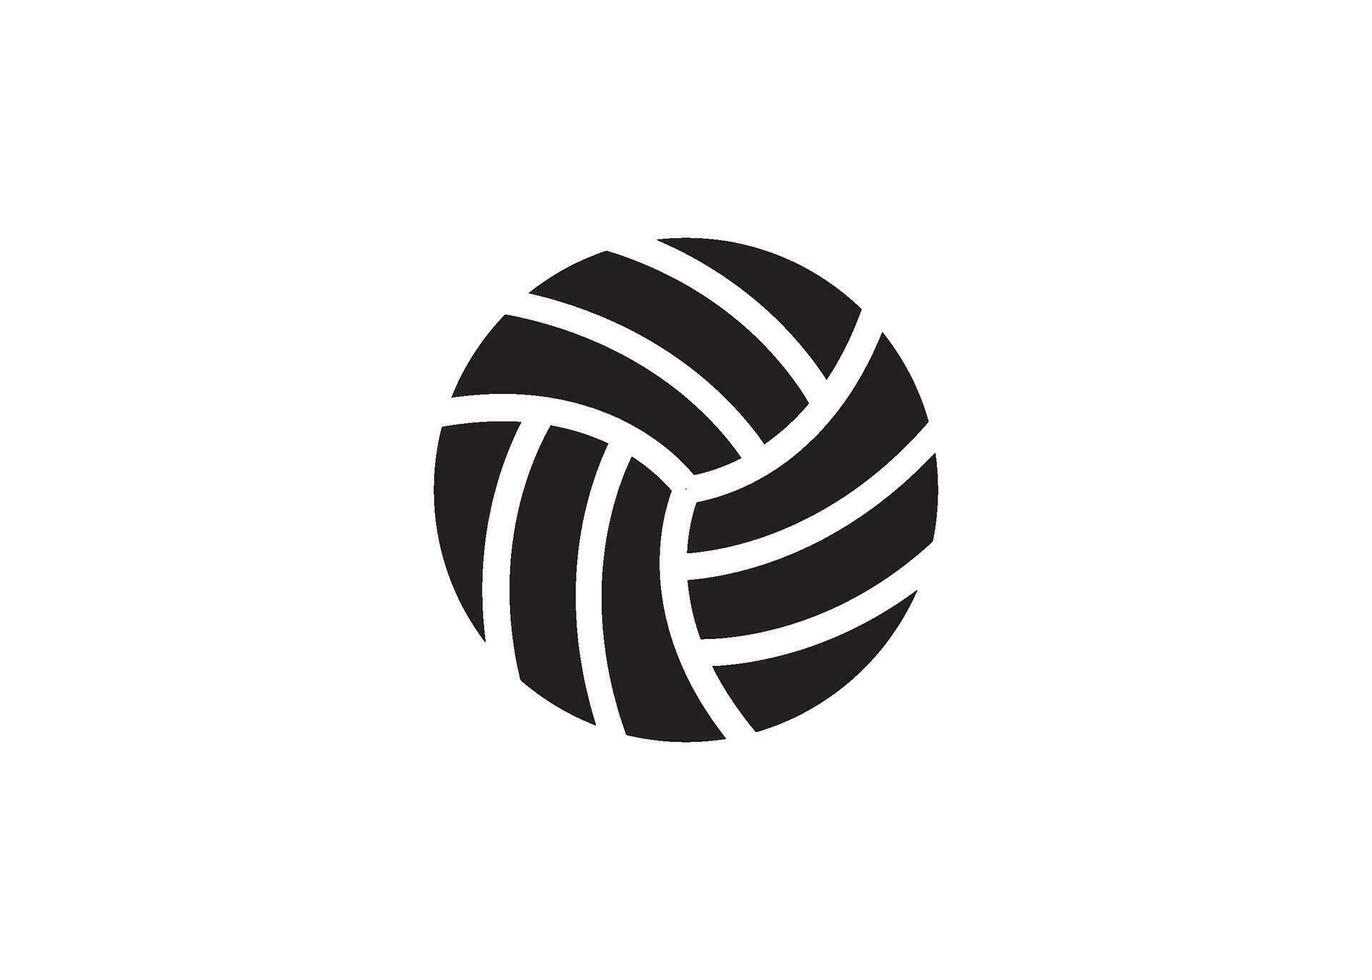 volleyball icon design vector